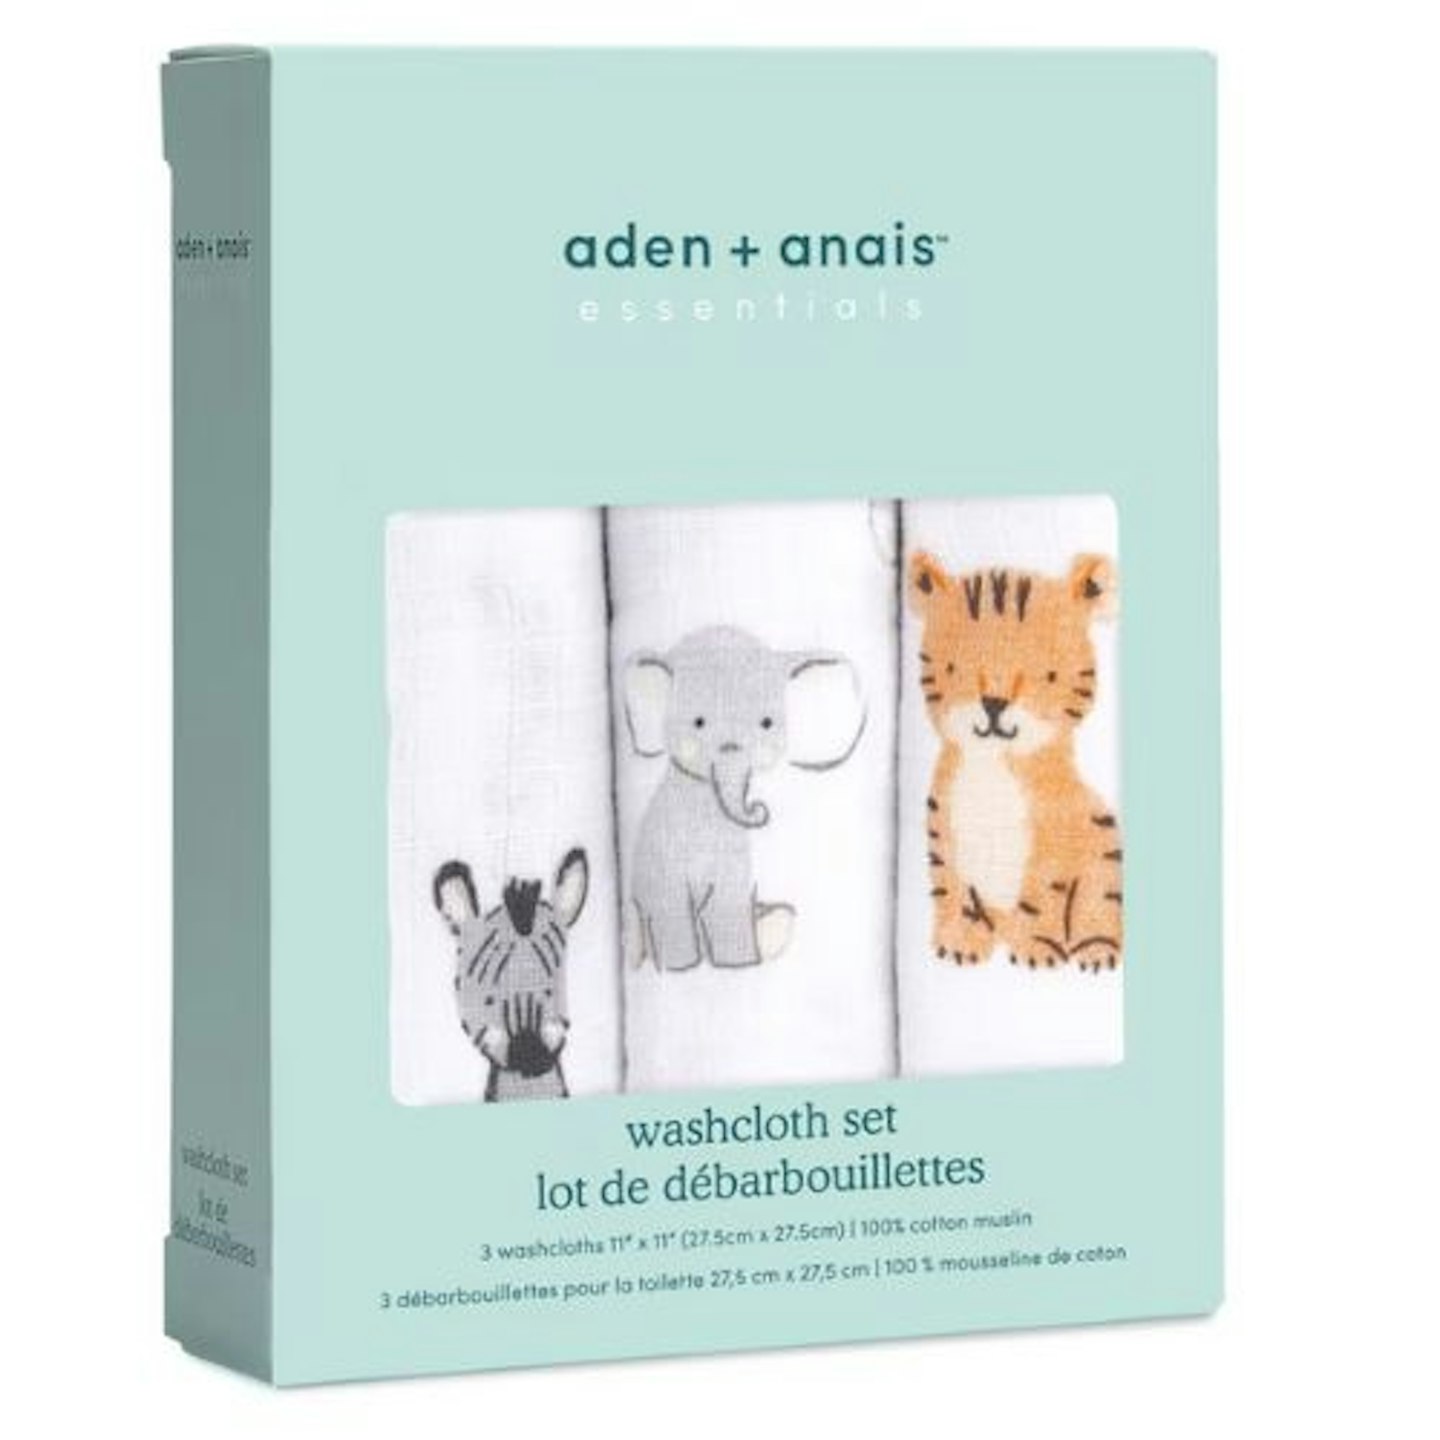 aden + anais baby products - aden + anais essentials Muslin Washcloths